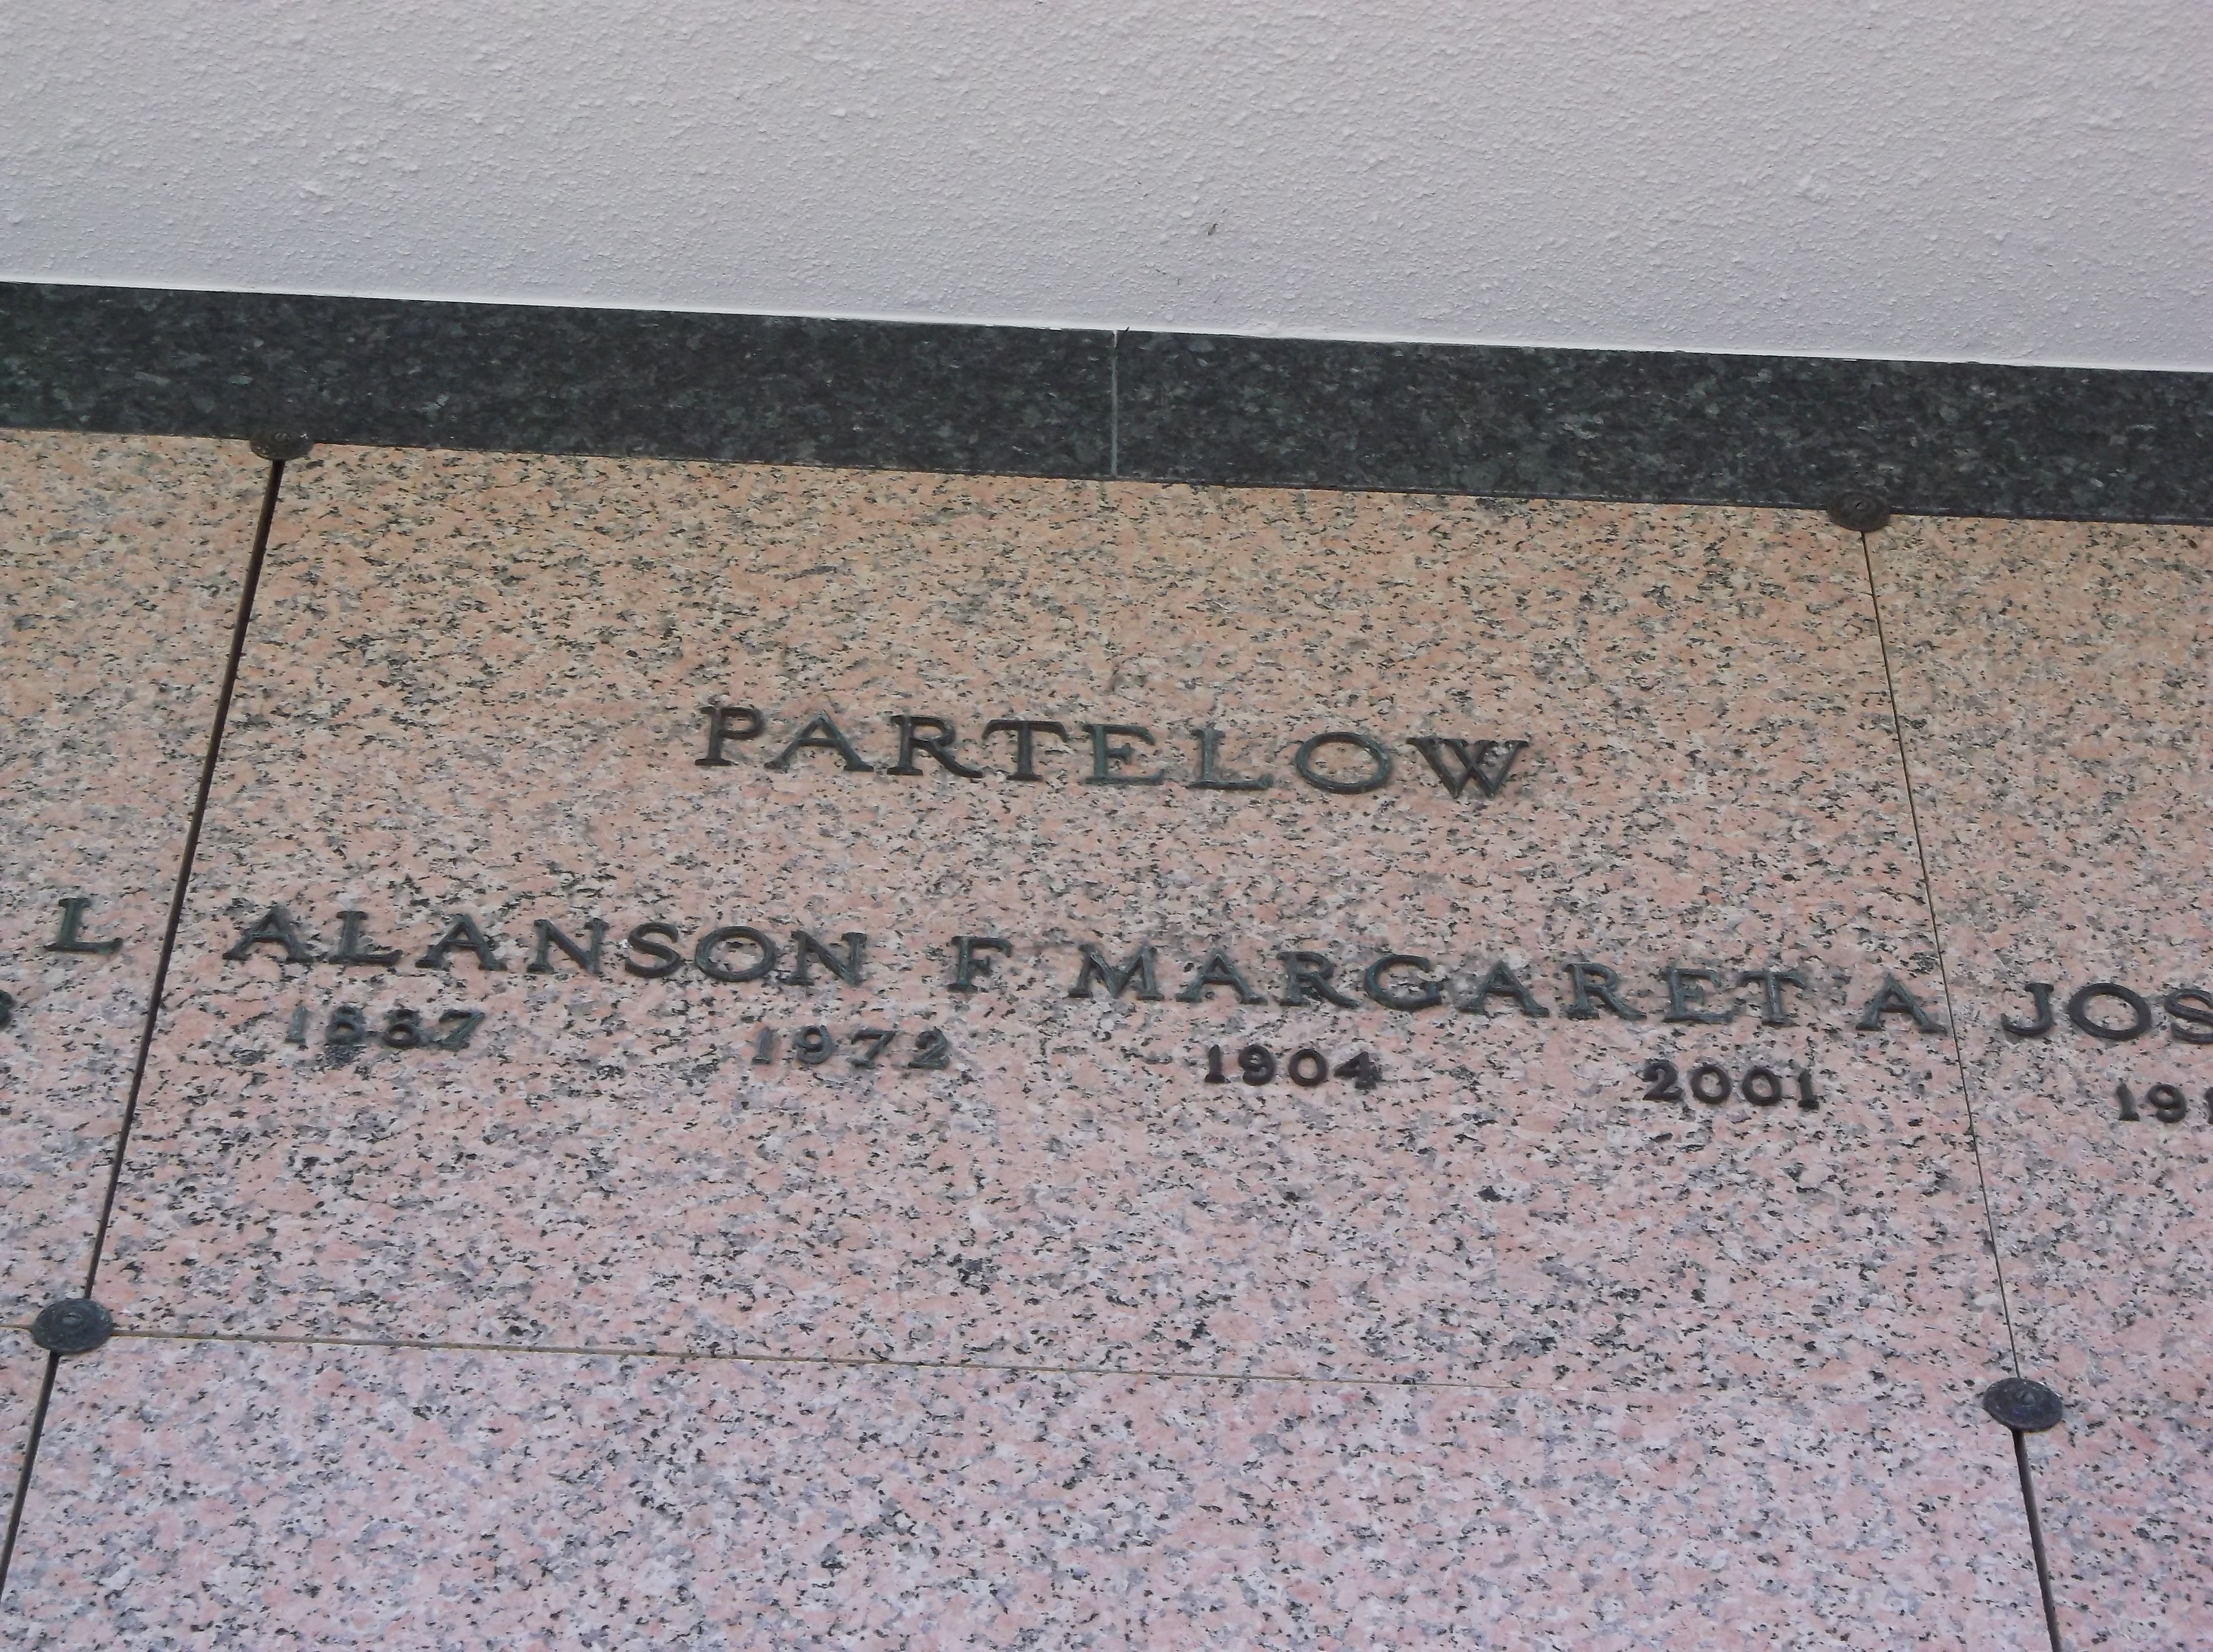 Alanson F Partelow